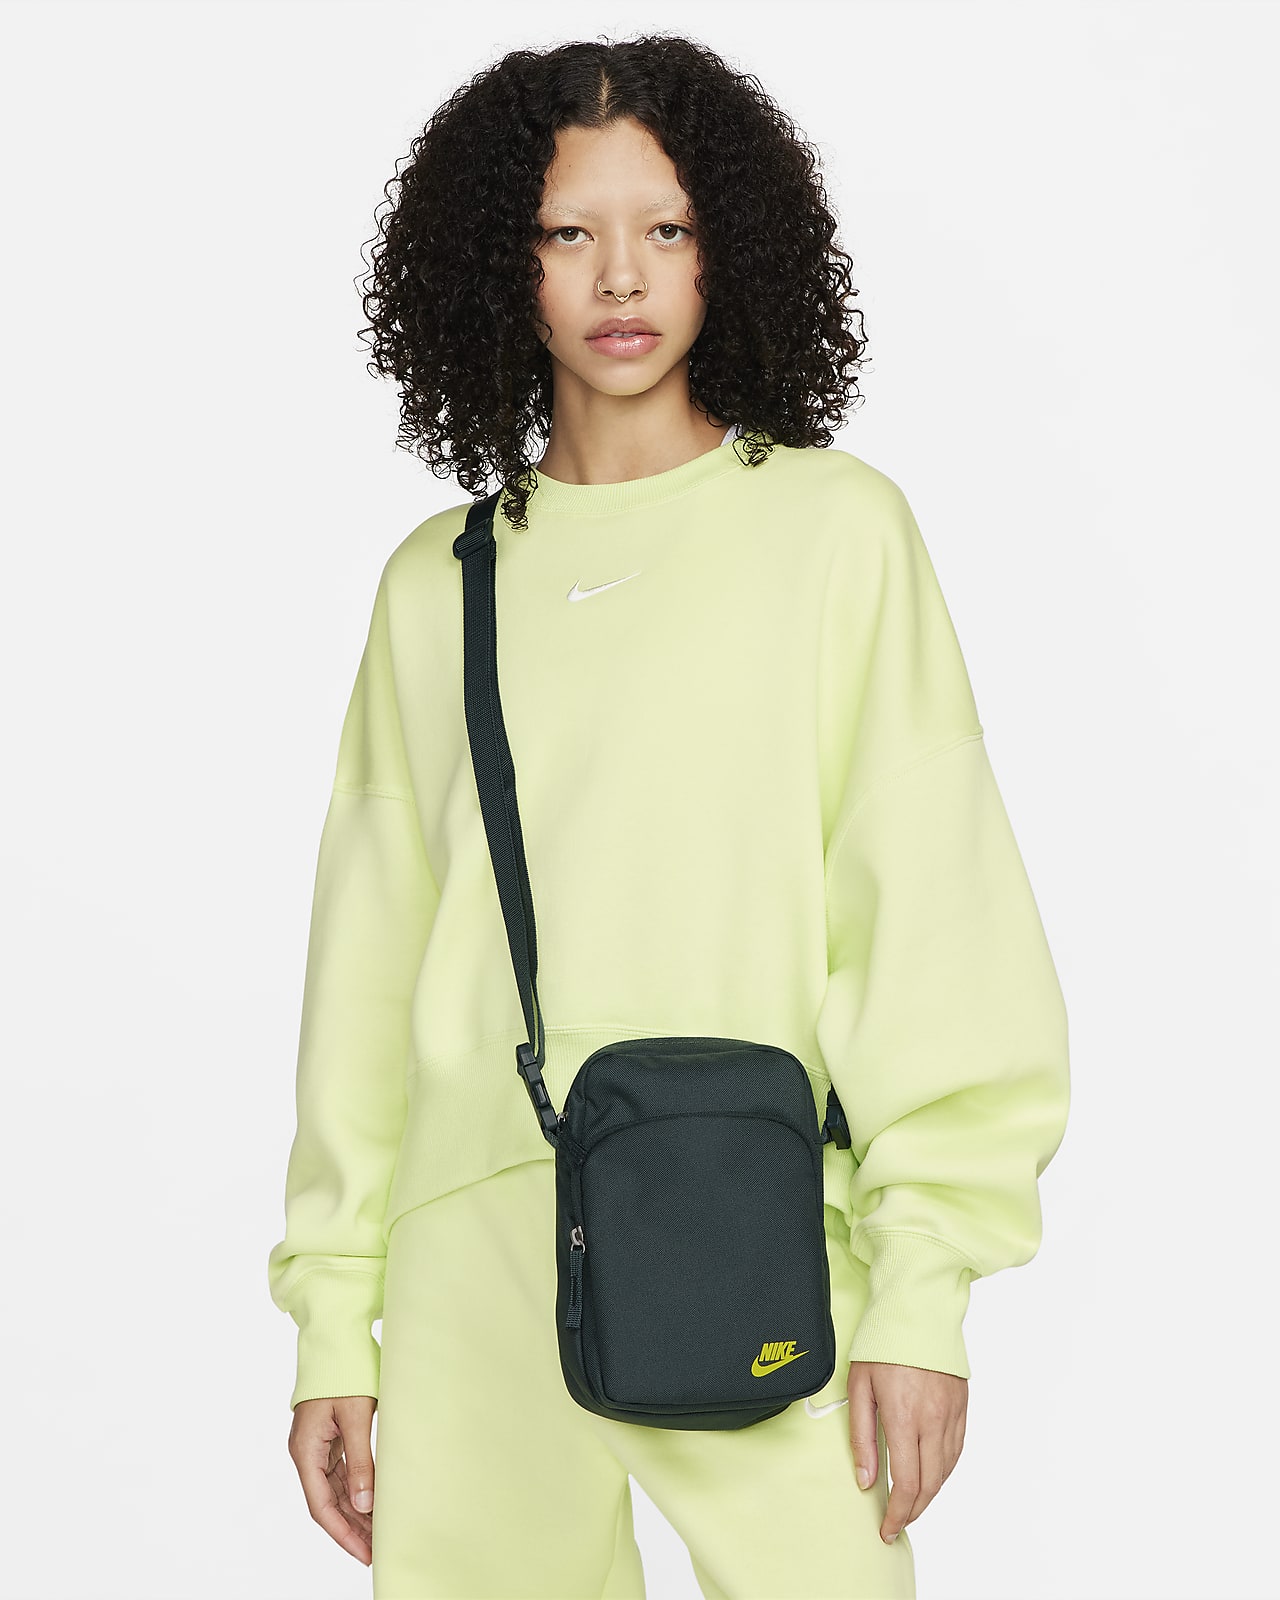 Nike Heritage cross body bag in lime green